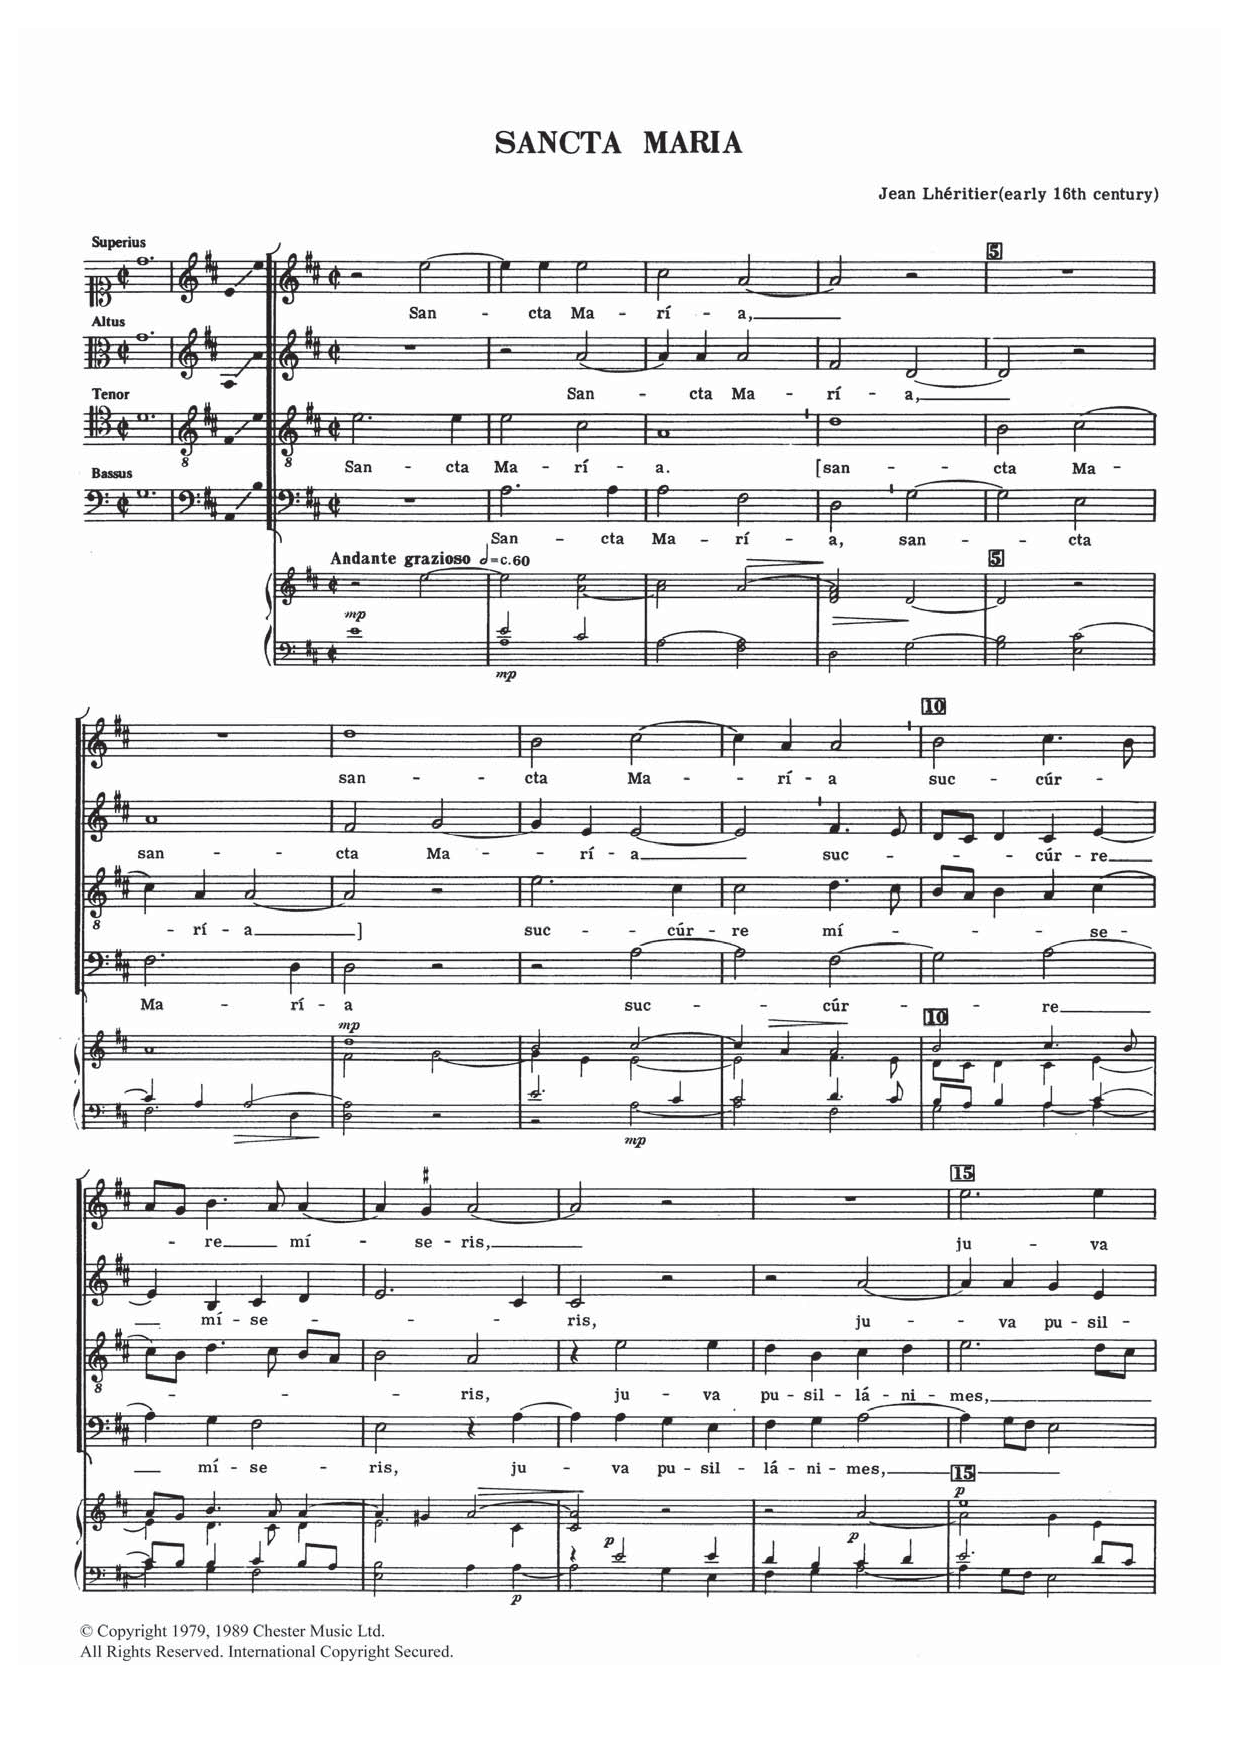 Jean Lheritier Sancta Maria Sheet Music Notes & Chords for SATB - Download or Print PDF